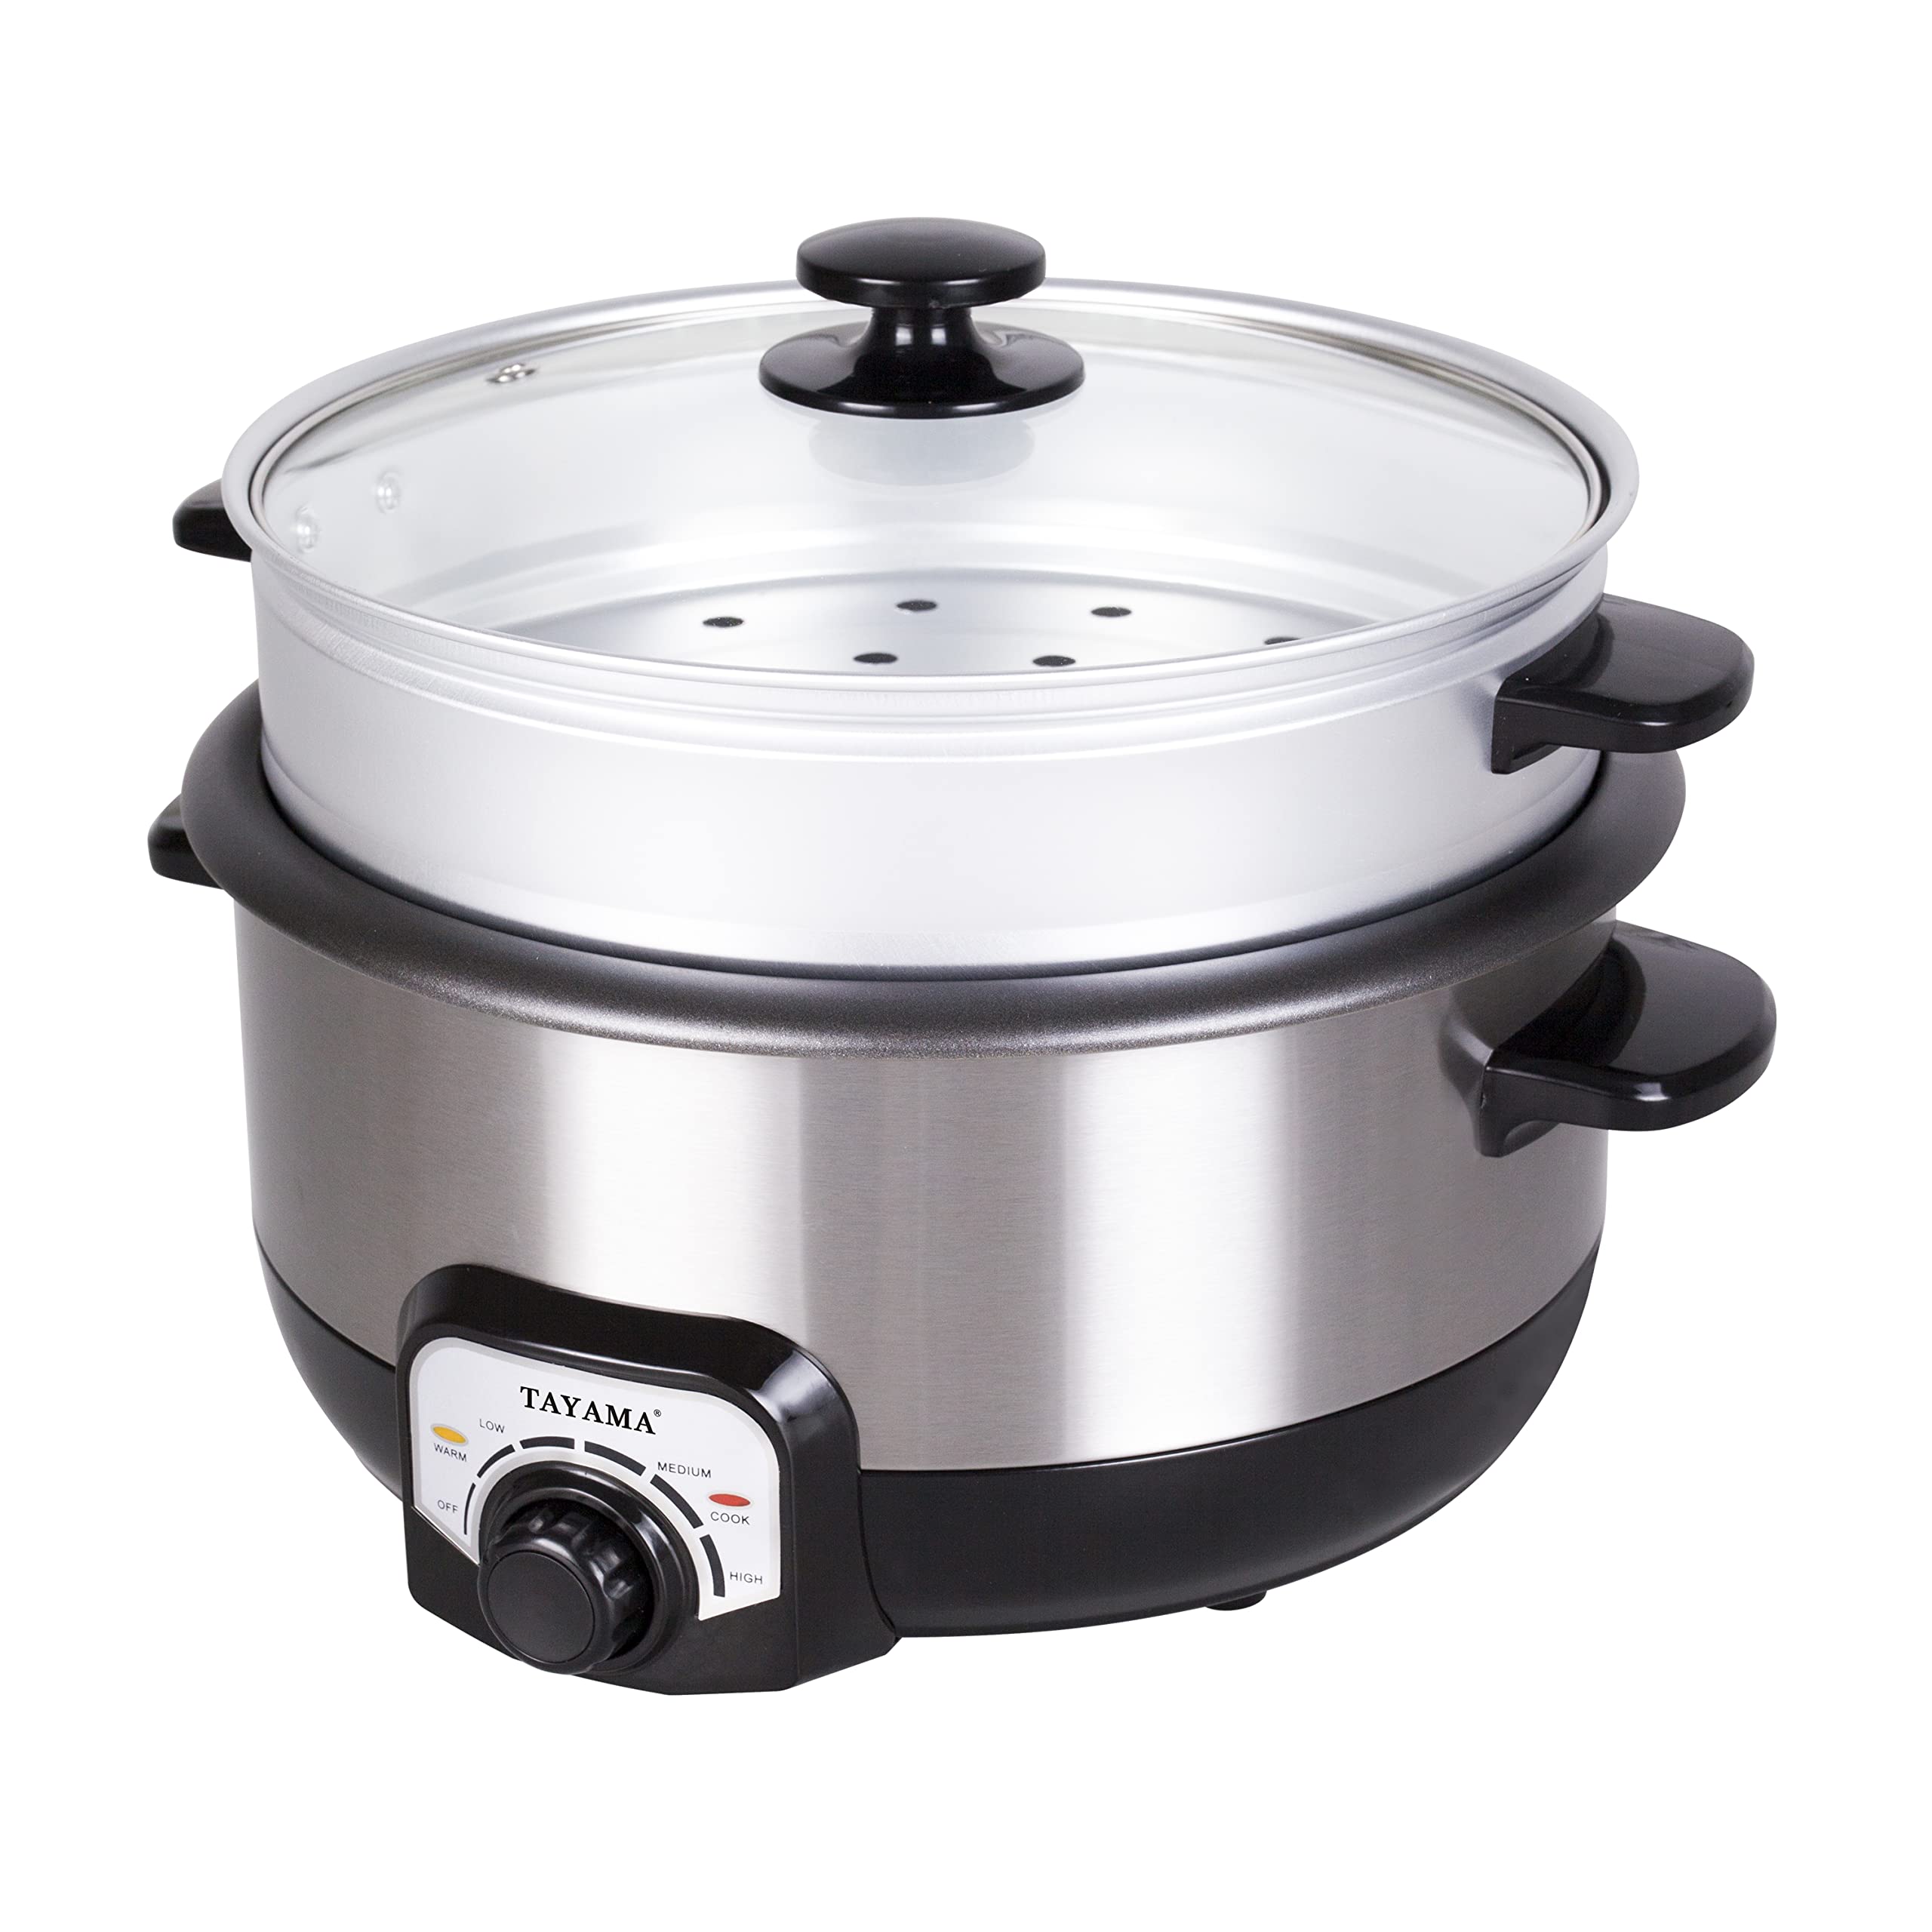 Joydeem Electric Hot Pot with Divider Large Shabu Shabu Hotpot Pot